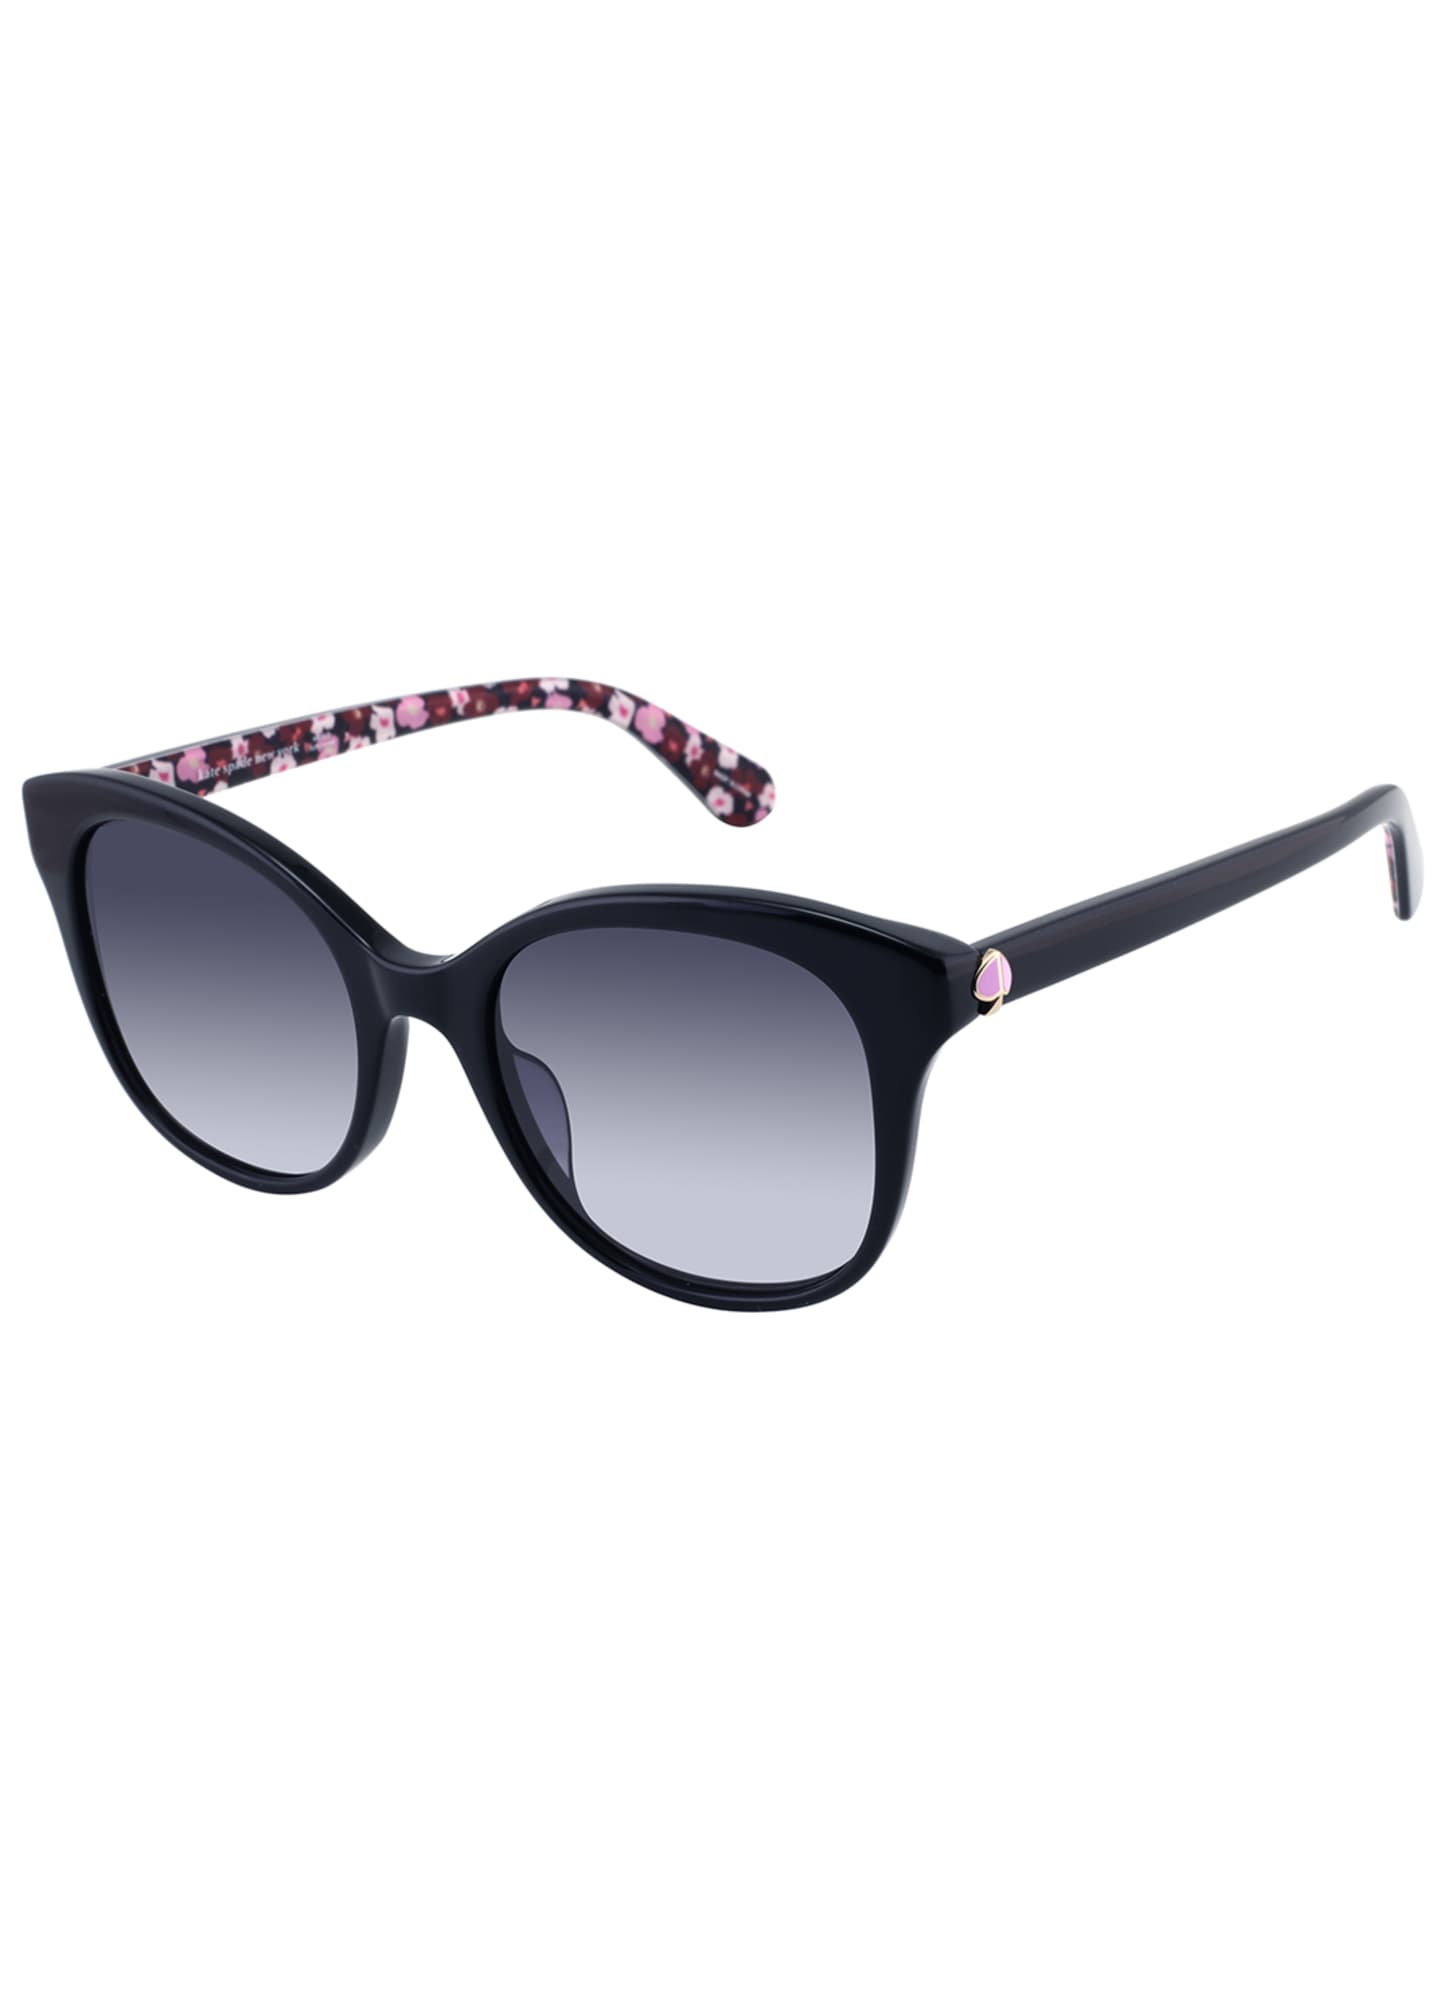 kate spade new york bianka round acetate sunglasses, black/purple -  Bergdorf Goodman